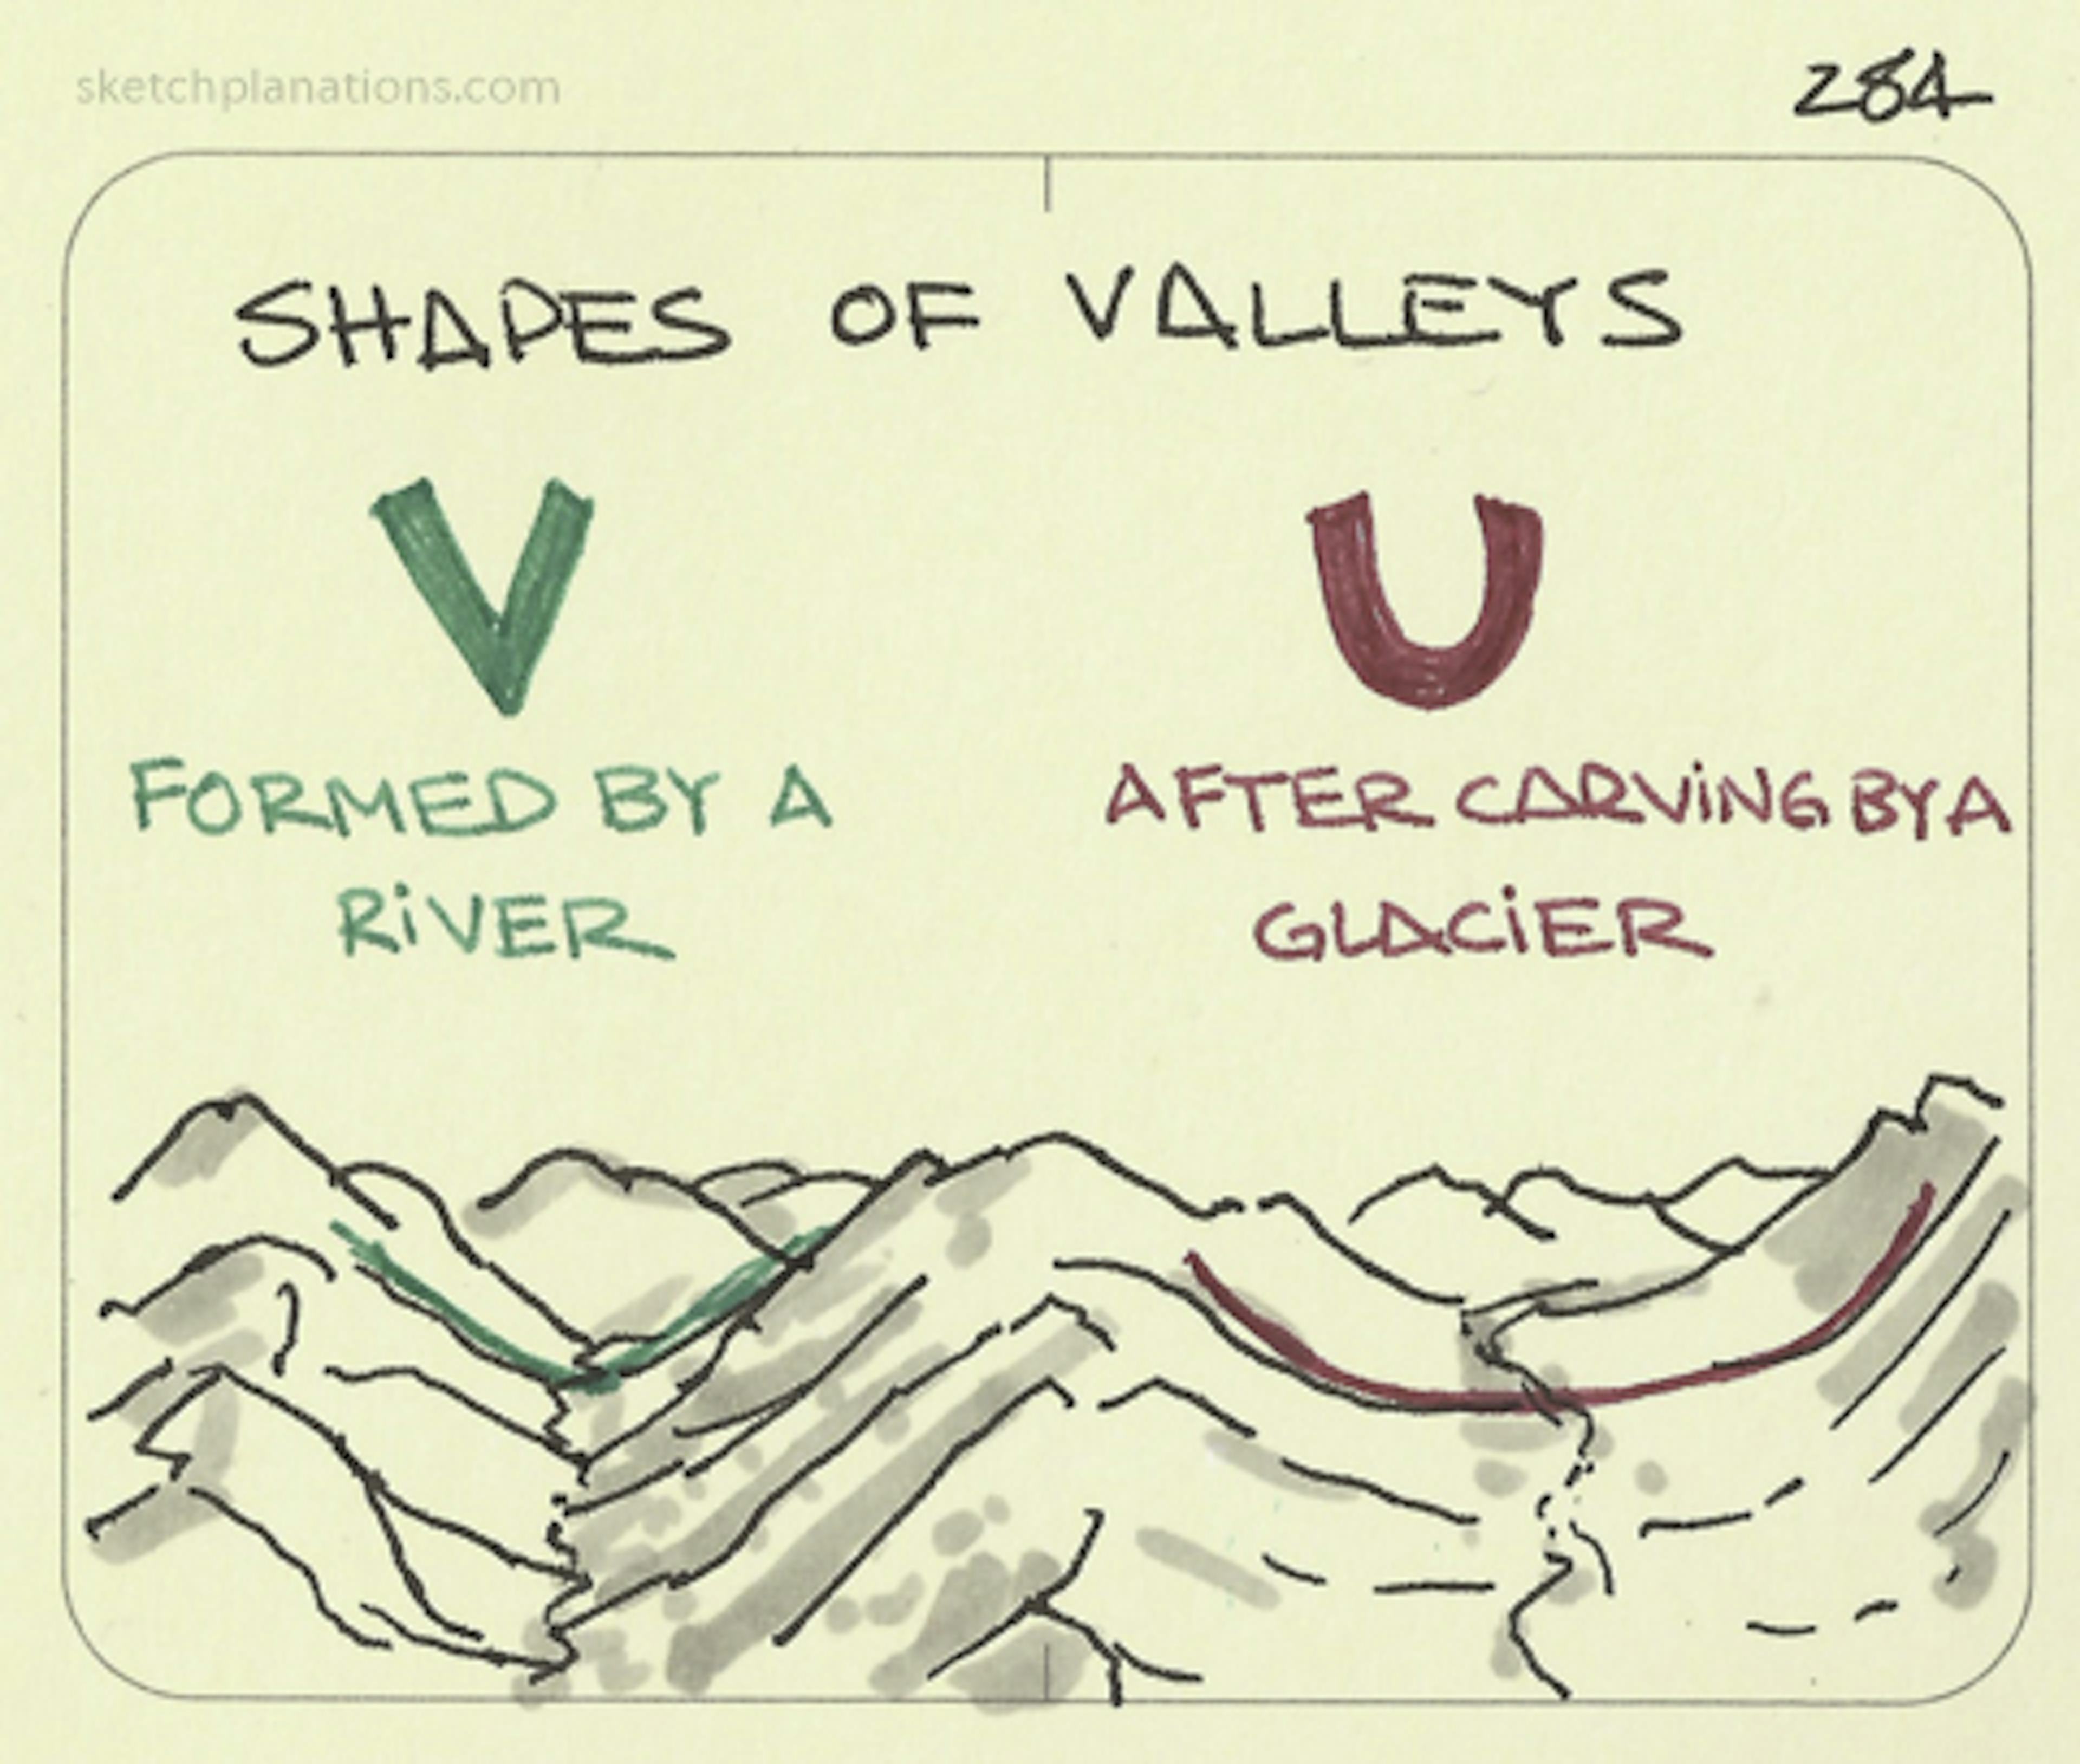 U- and V-shaped valleys